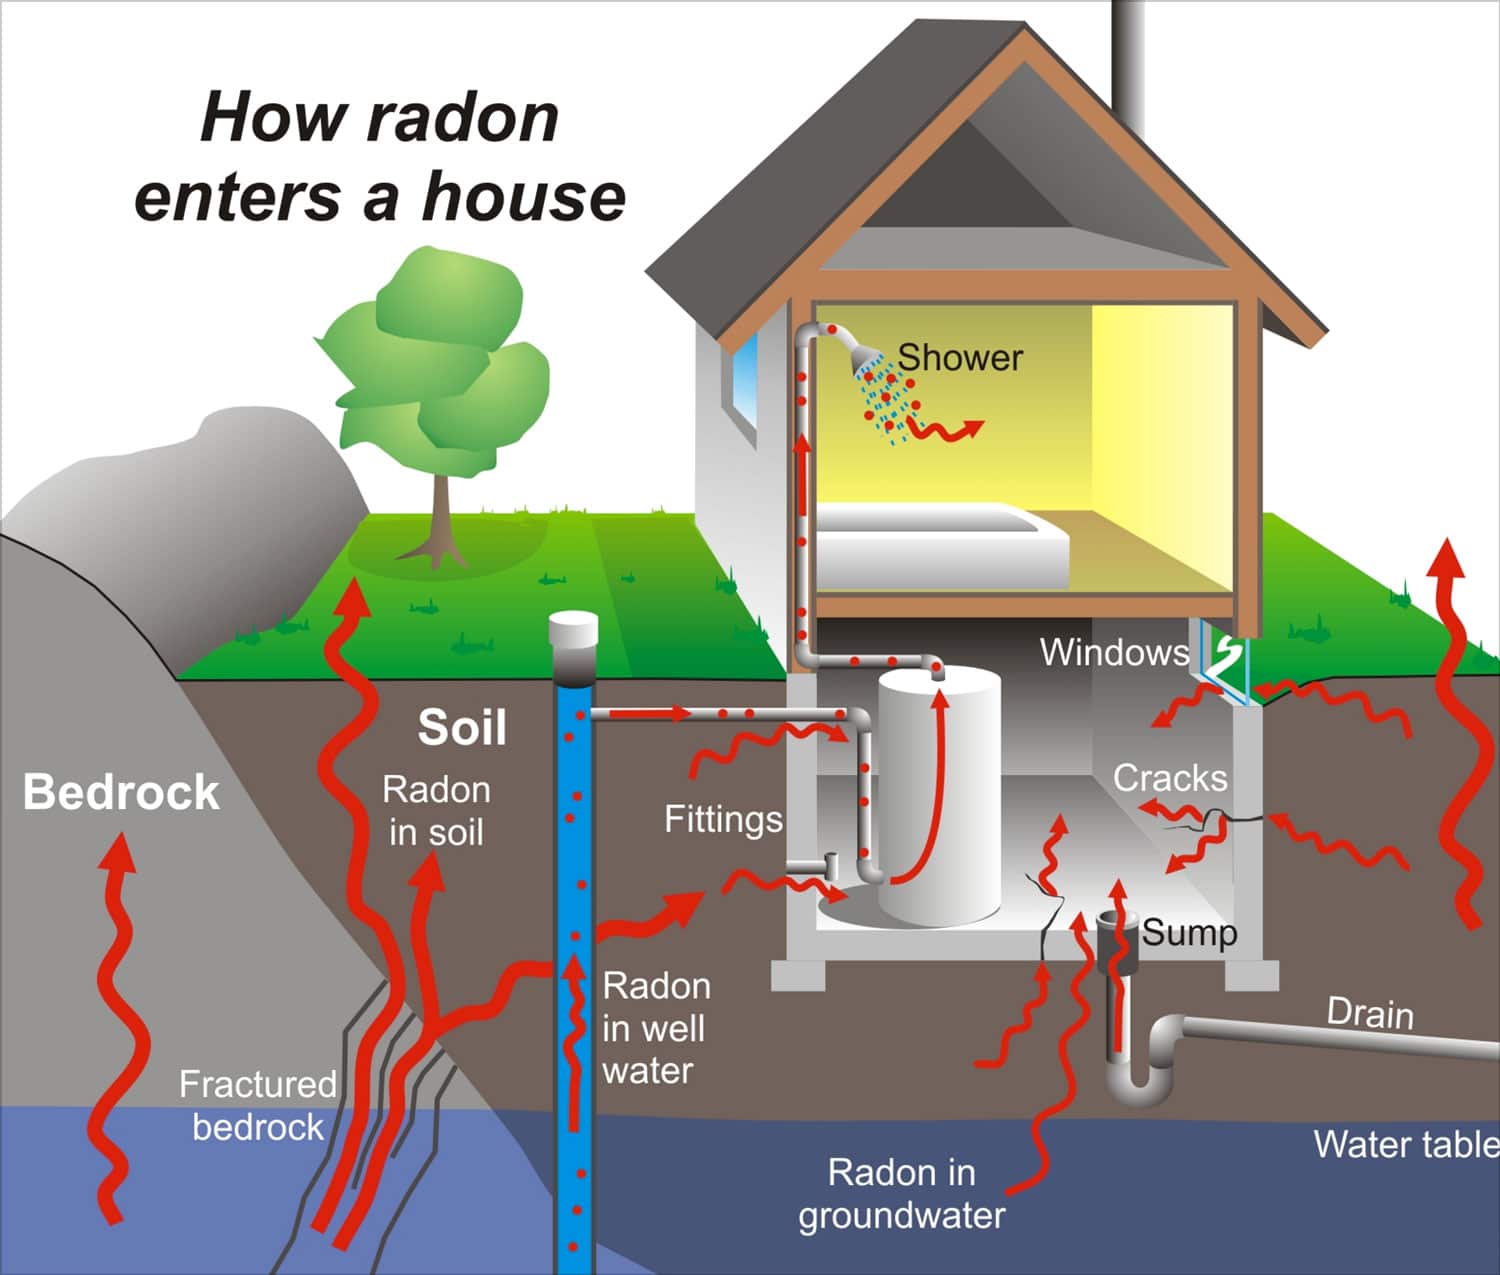 radon-enters-home.jpg